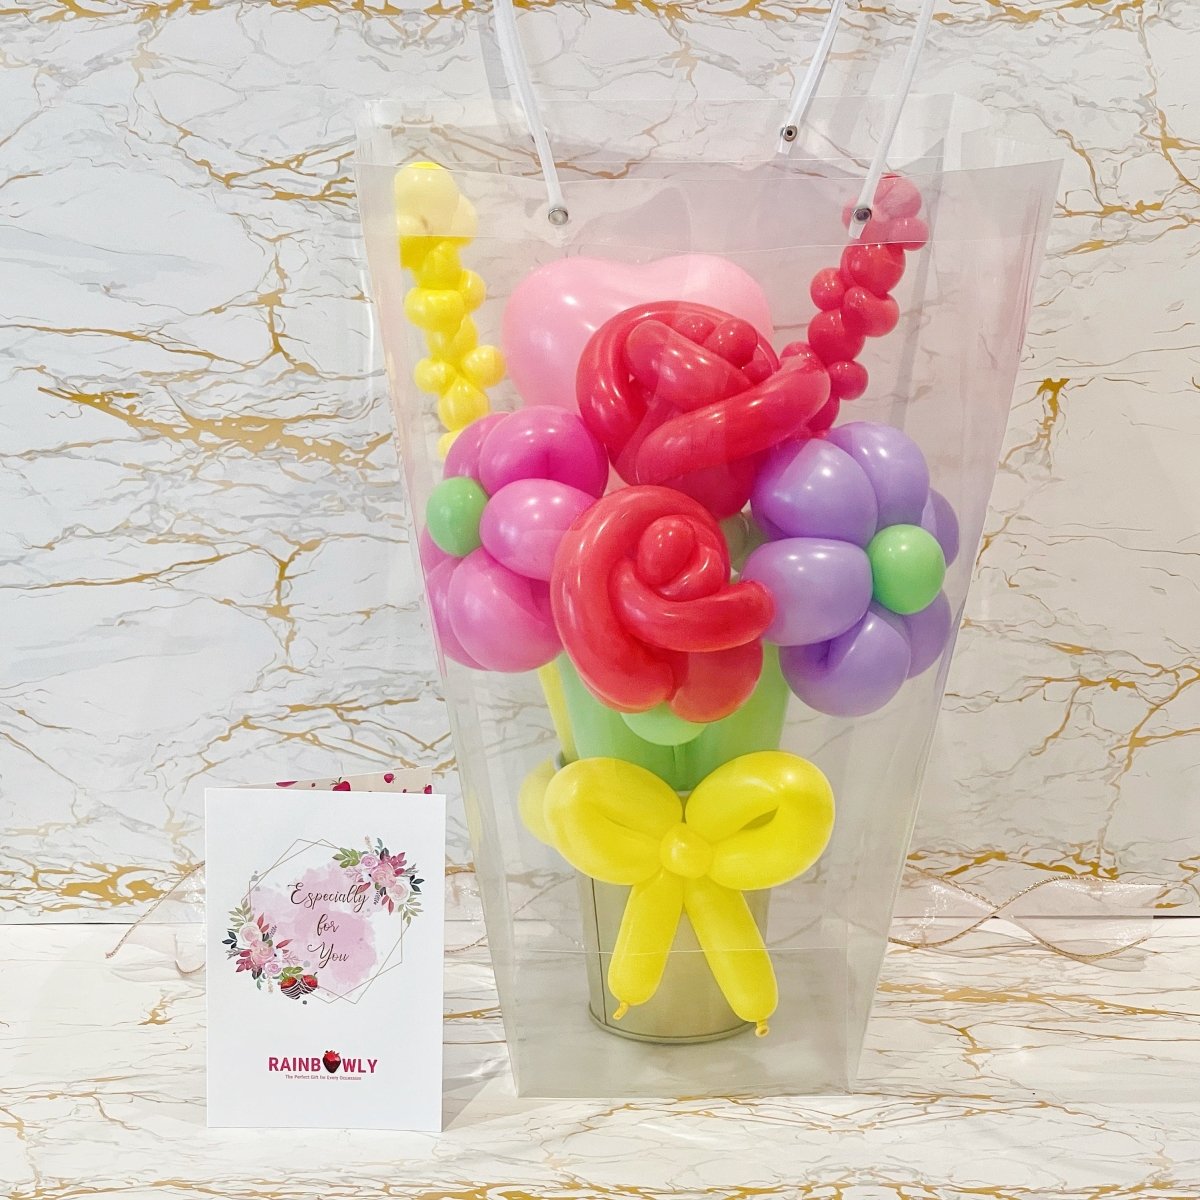 Gorgeous Mix Floral - Balloon Flower Bouquet Arrangement - Rainbowly Fresh Fruit Gift and Flower Arrangments